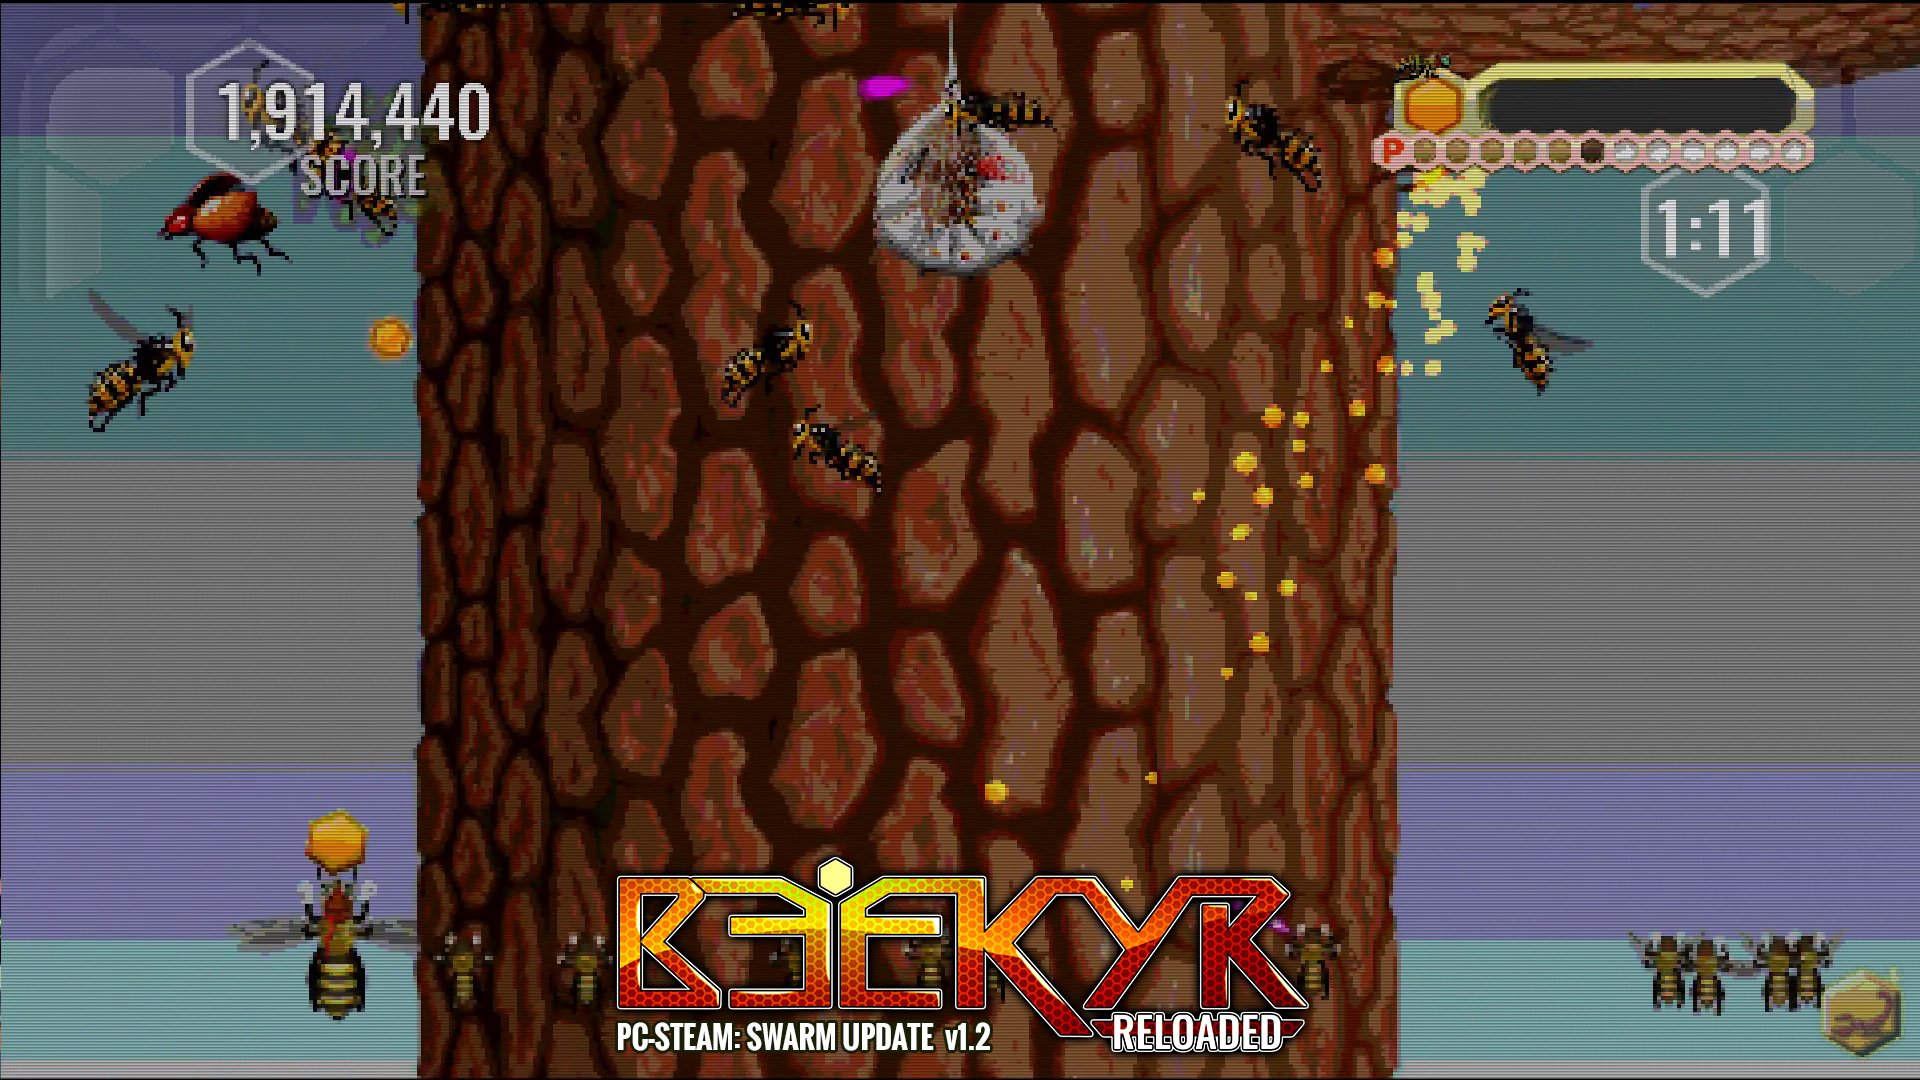 Beekyr Reloaded screenshot